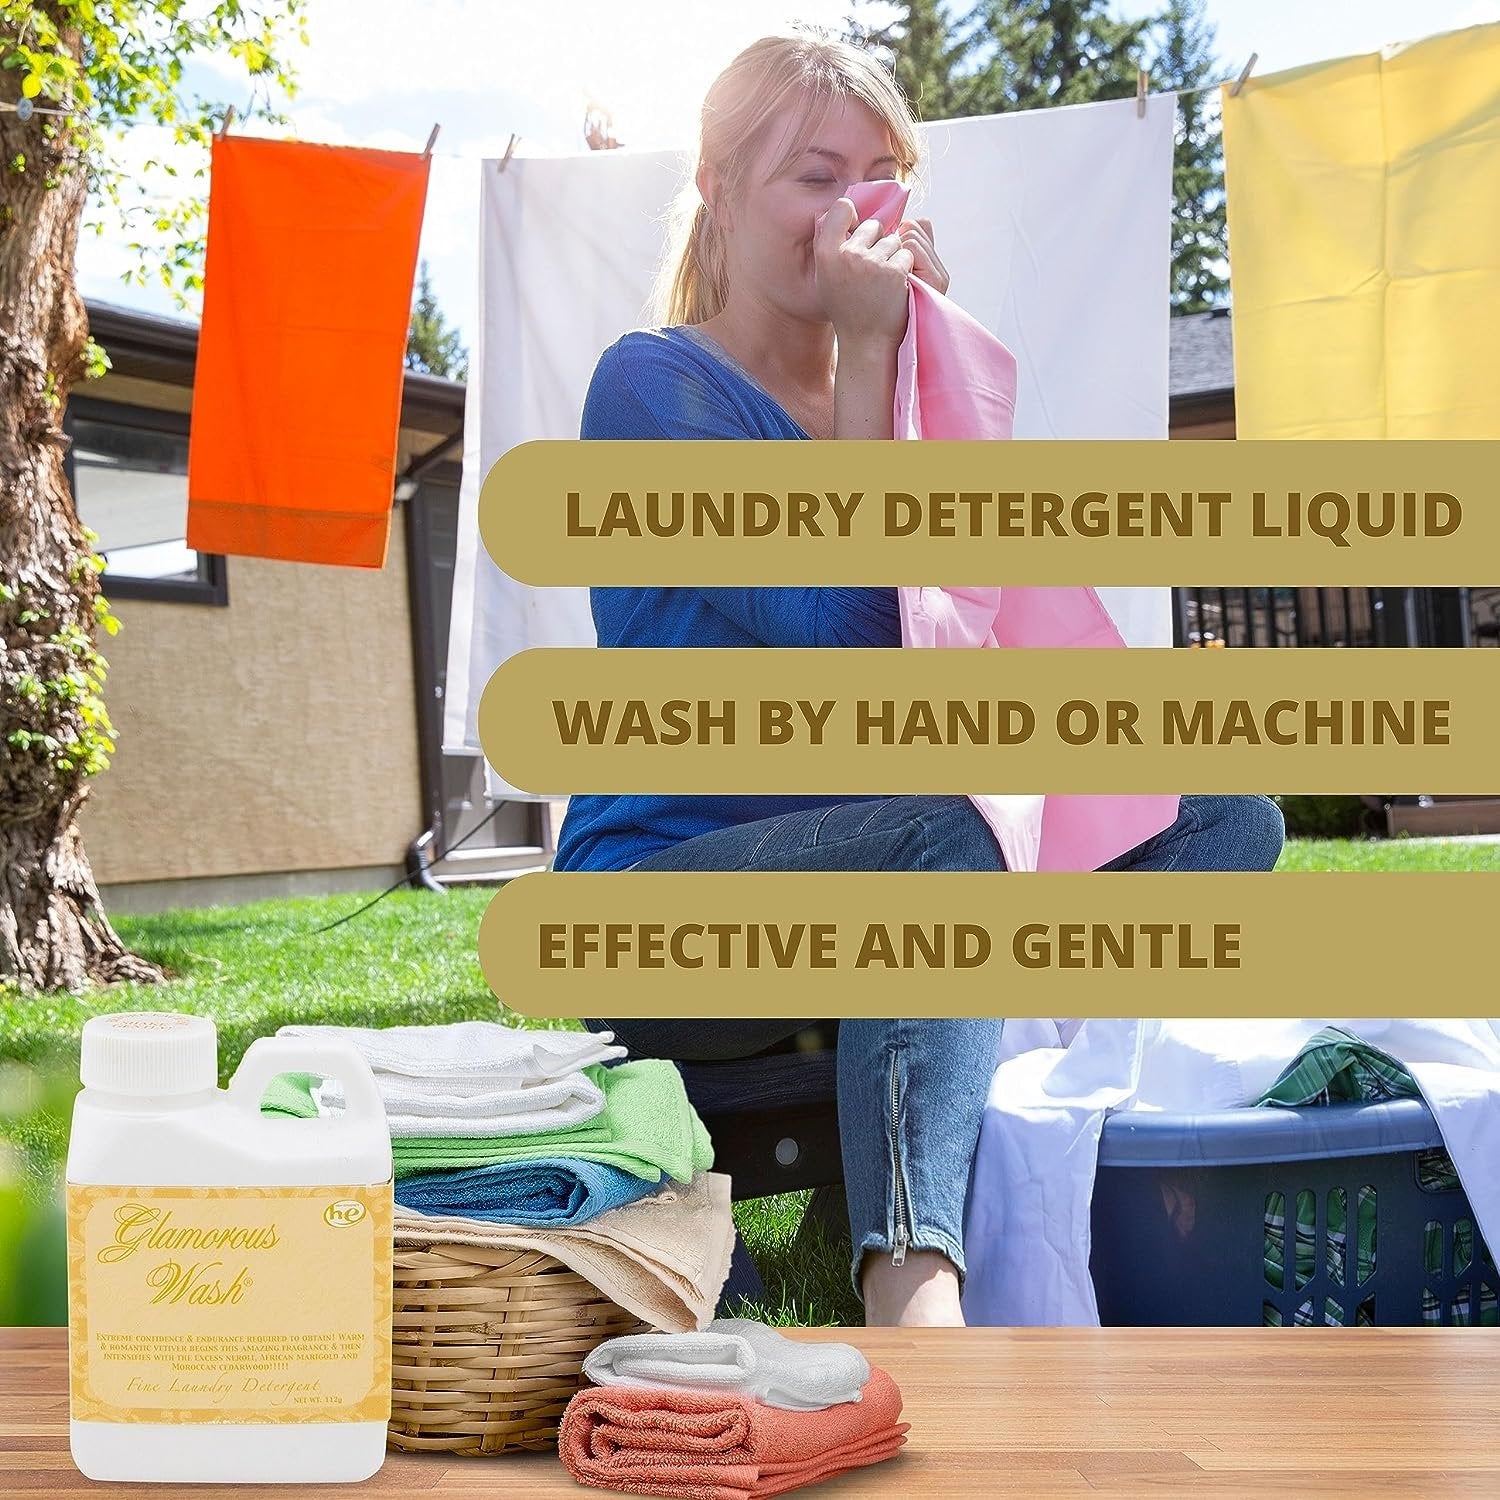 Worldwide Nutrition Bundle, 2 Items: Tyler Glamorous Wash Wishlist Scent Fine Laundry Liquid Detergent - Hand and Machine Washable - 4 oz, 112-gram Container and Multi-Purpose Key Chain